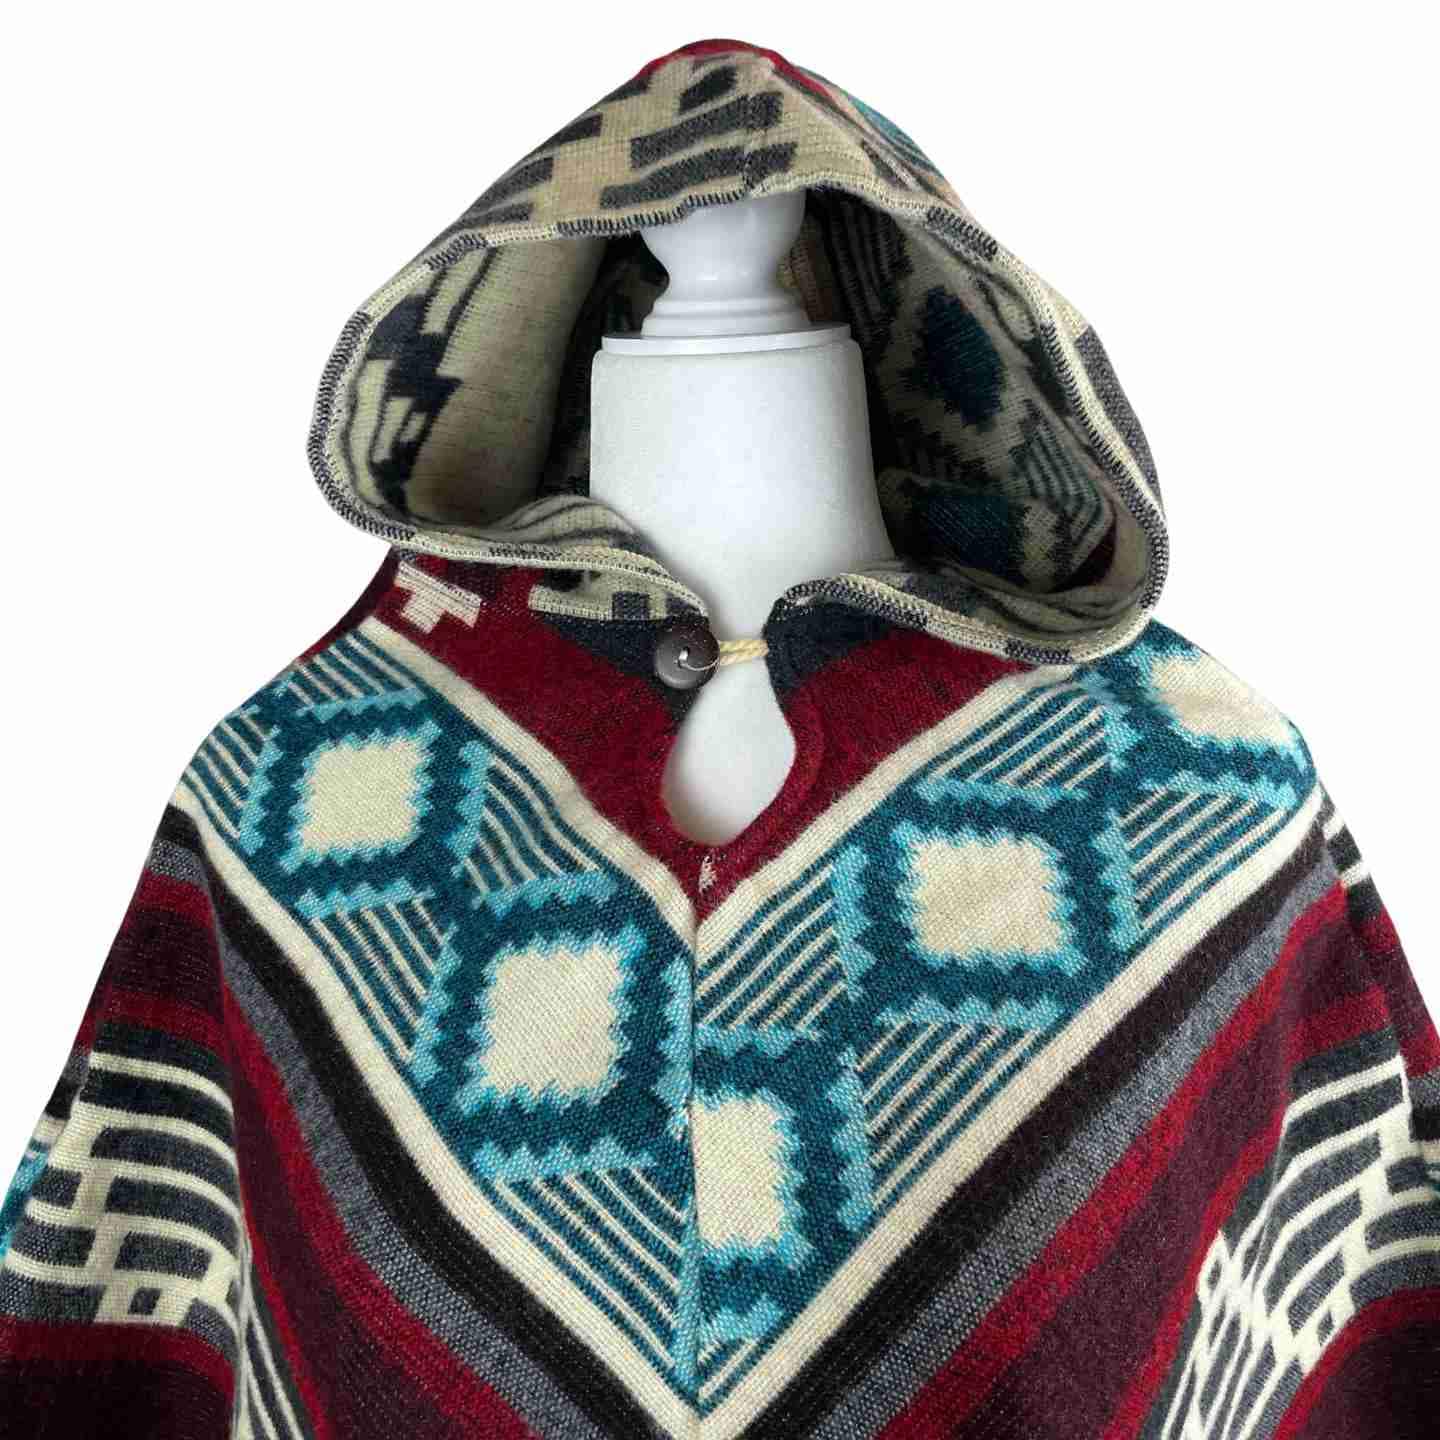 Warm Cozy Boho Alpaca Wool Hooded Poncho - Winter Soft Outerwear for Women, Wine Beige Teal V Style Cape with Tassels